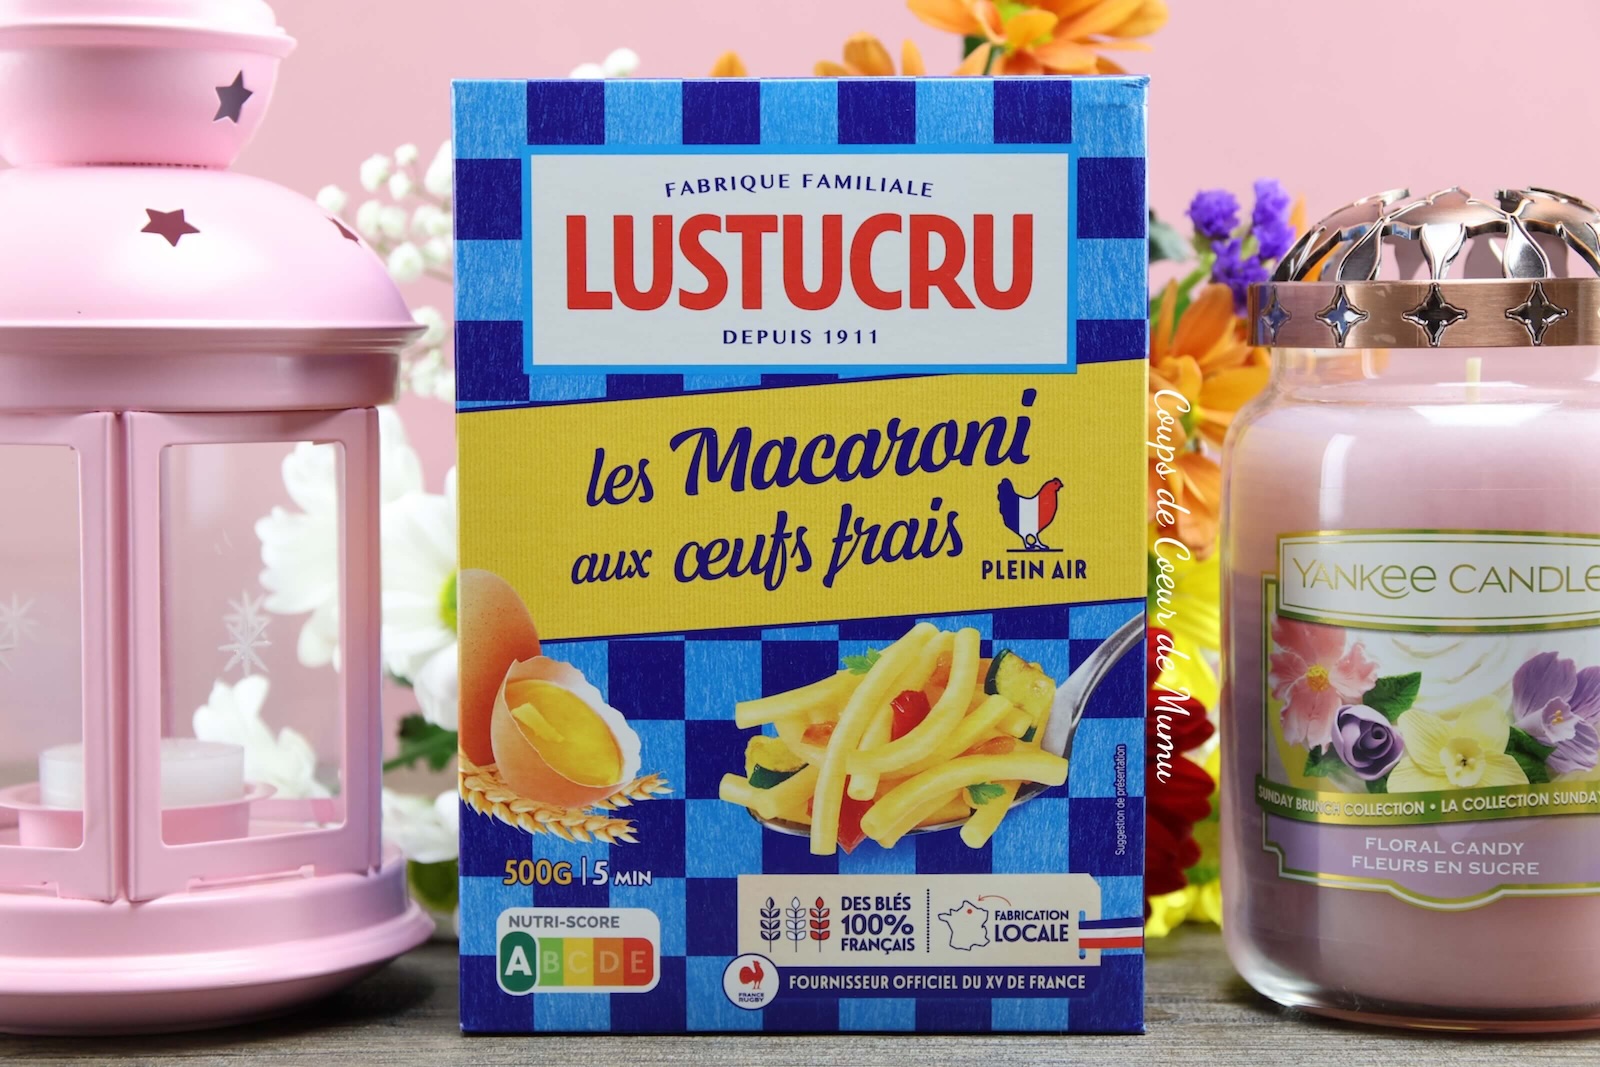 Macaroni aux Oeufs Frais Lustucru